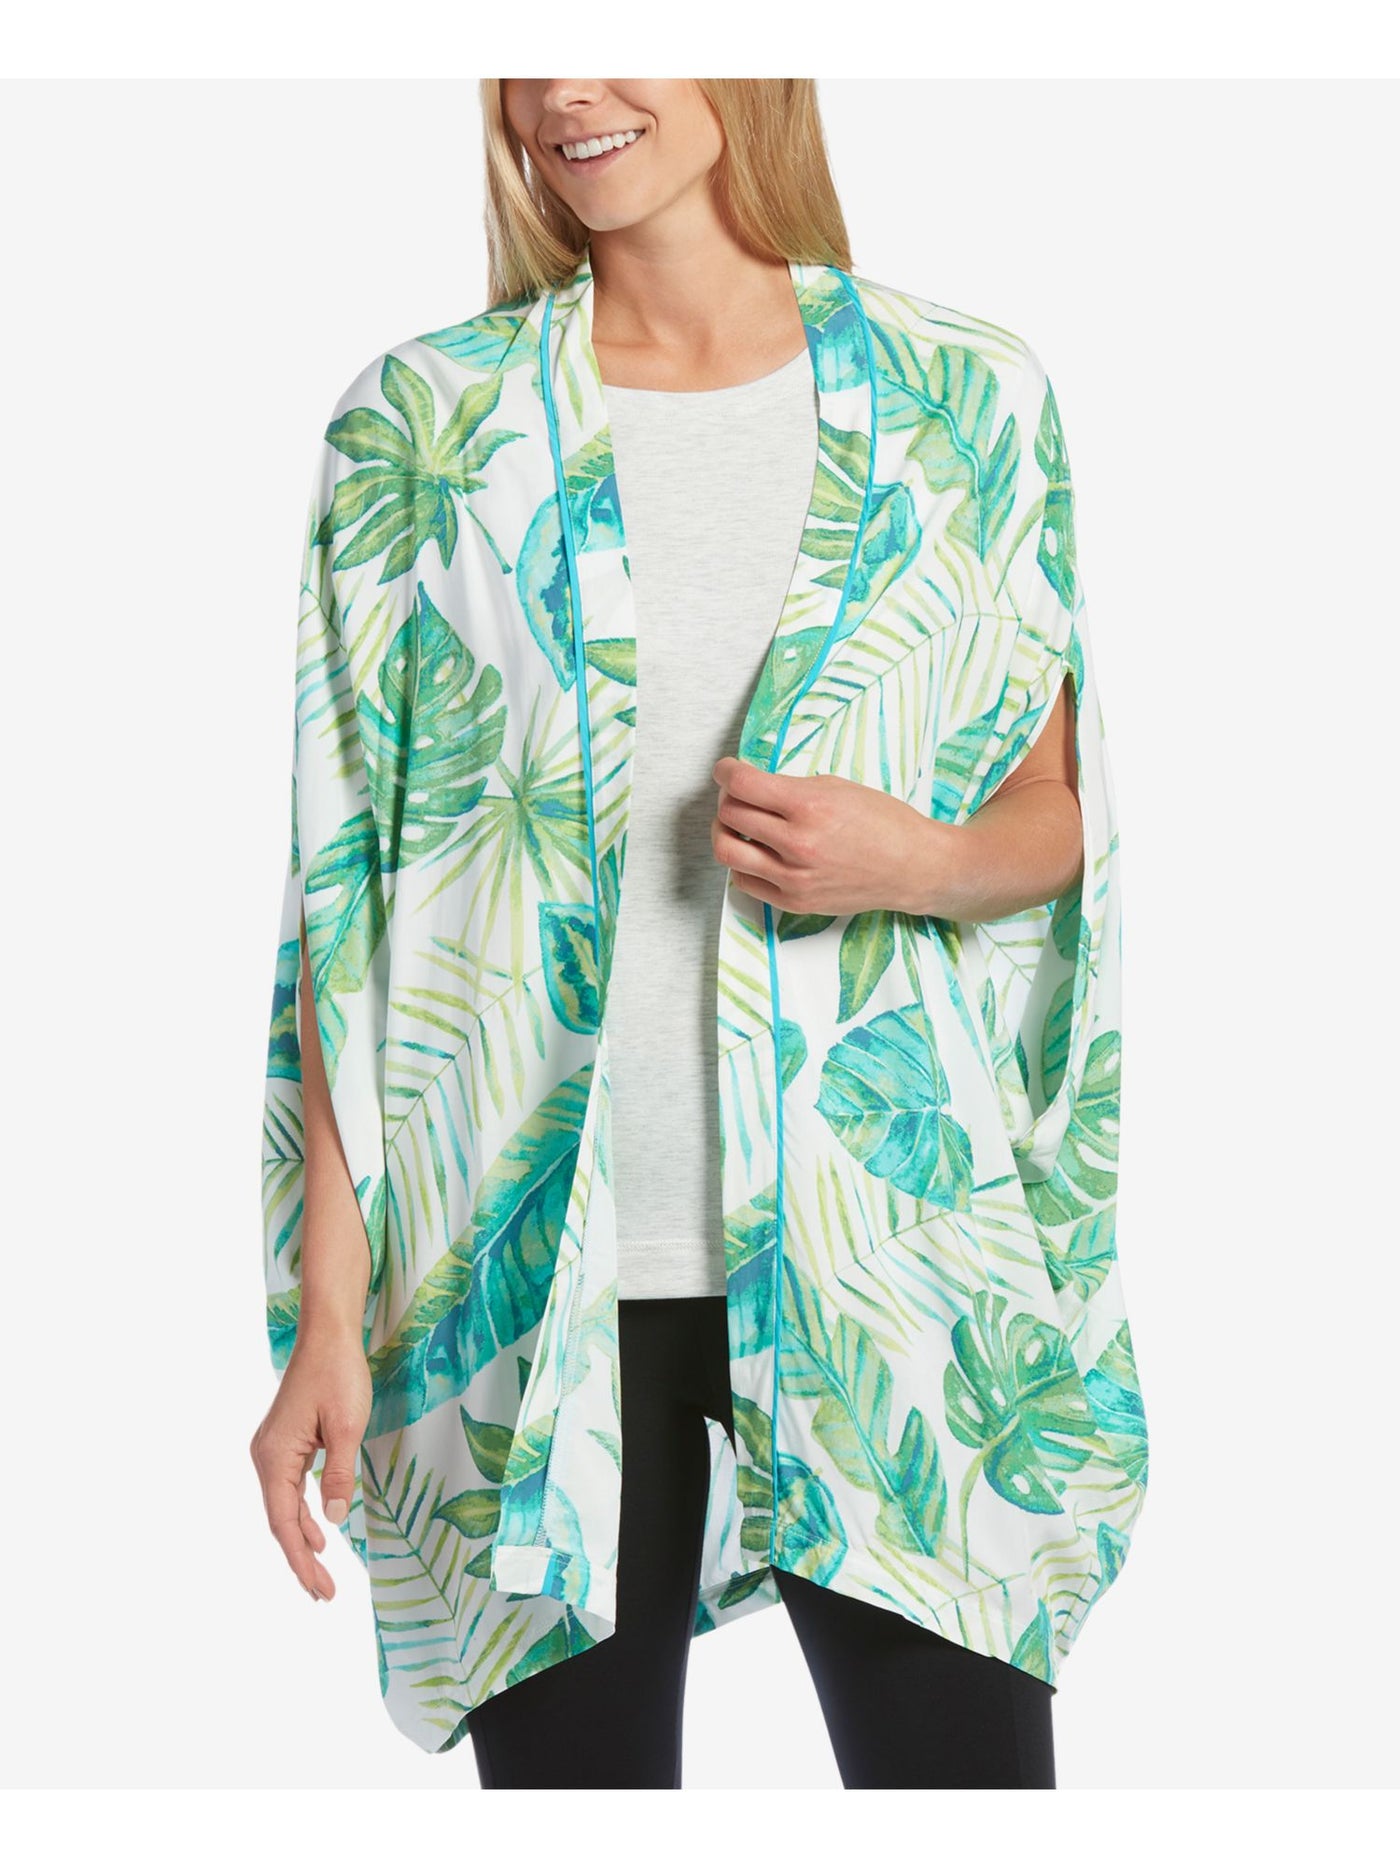 HUE Intimates Green leafs Sleepwear Robe Size: S\M